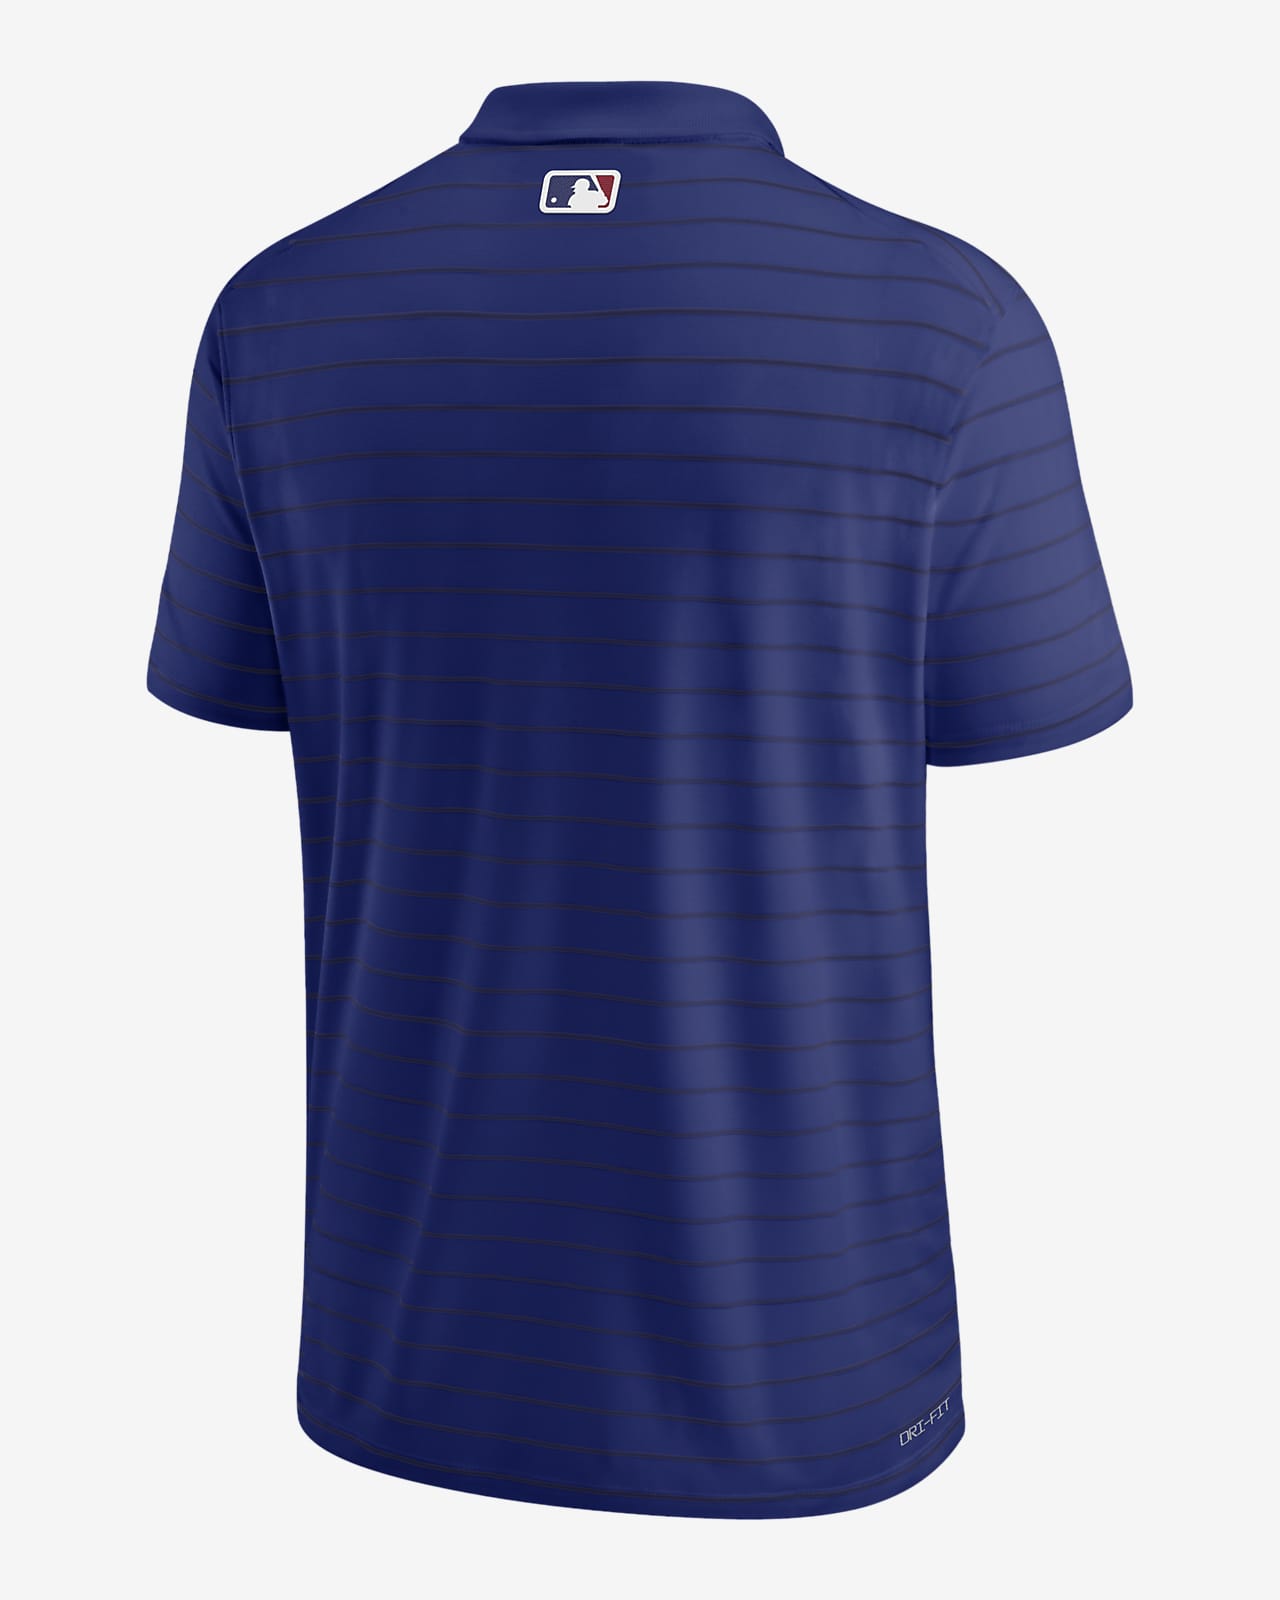 Dodgers Nike Polo - Mens S / Rush Blue